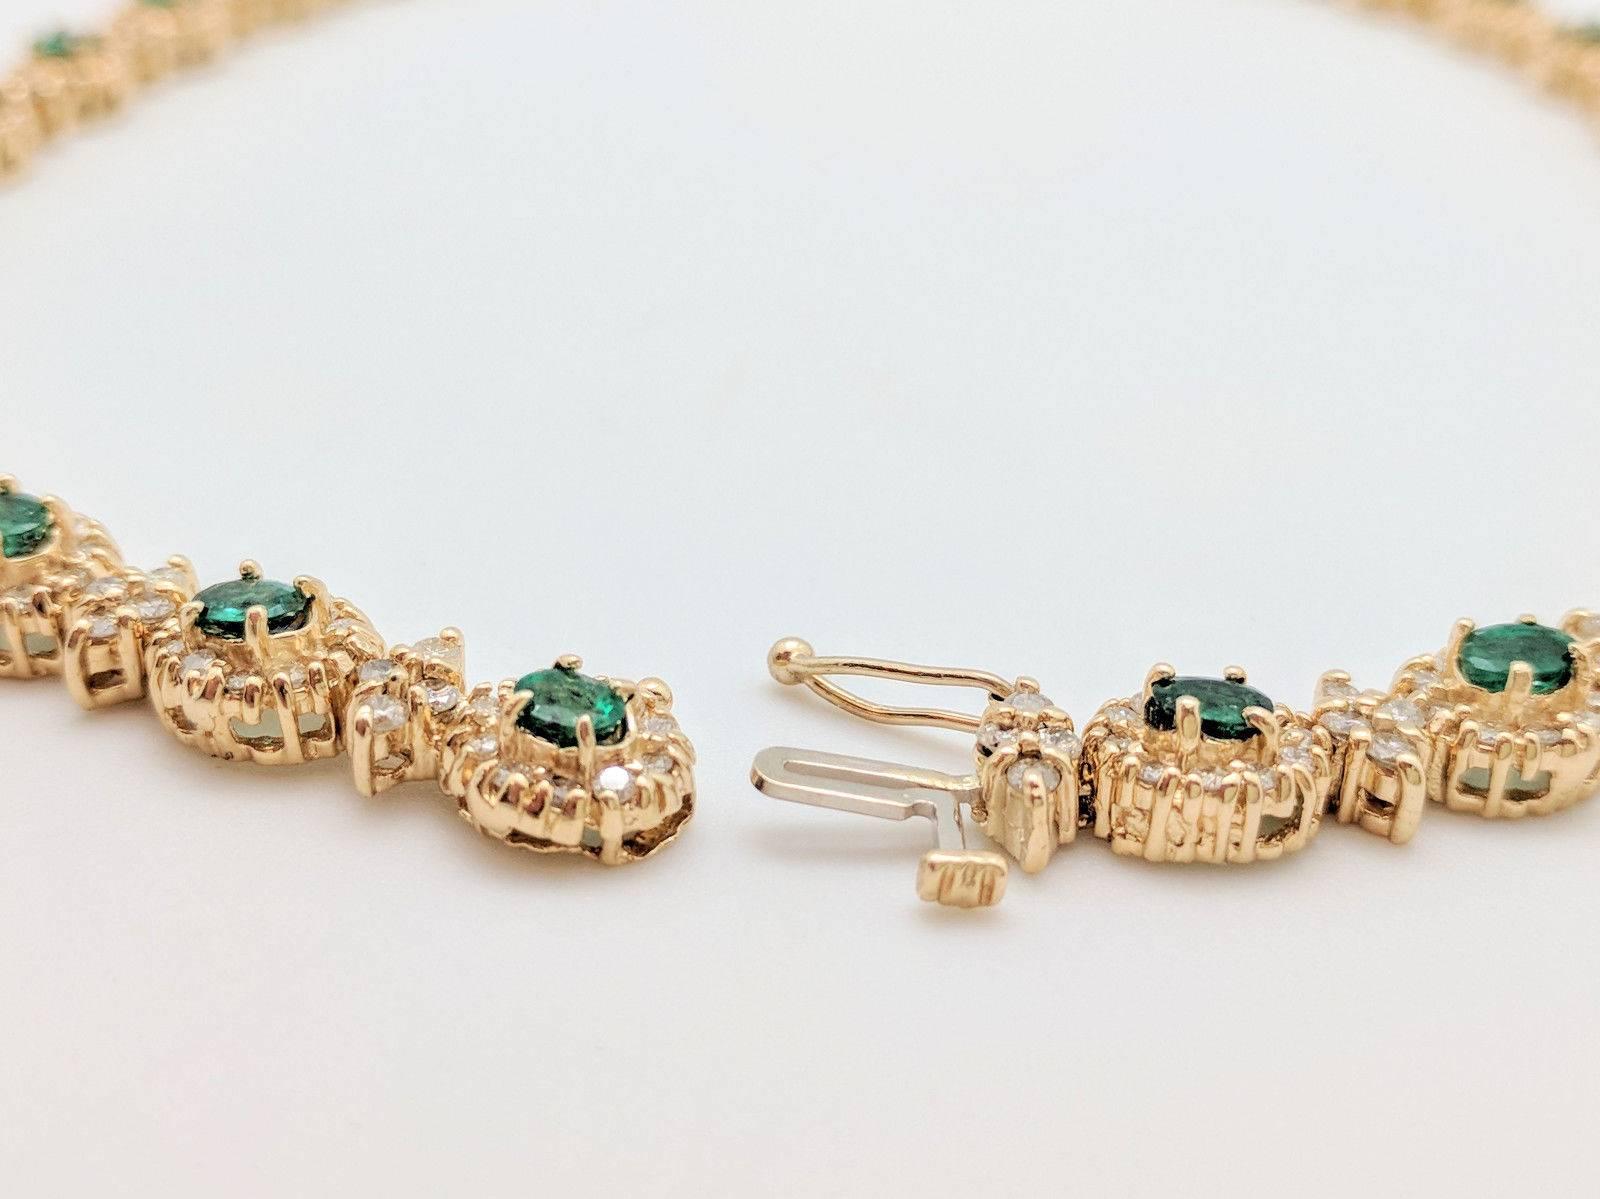 14 Karat Gold 16.72 Carat Emerald and Diamond Tennis Necklace 54.8 Grams For Sale 1